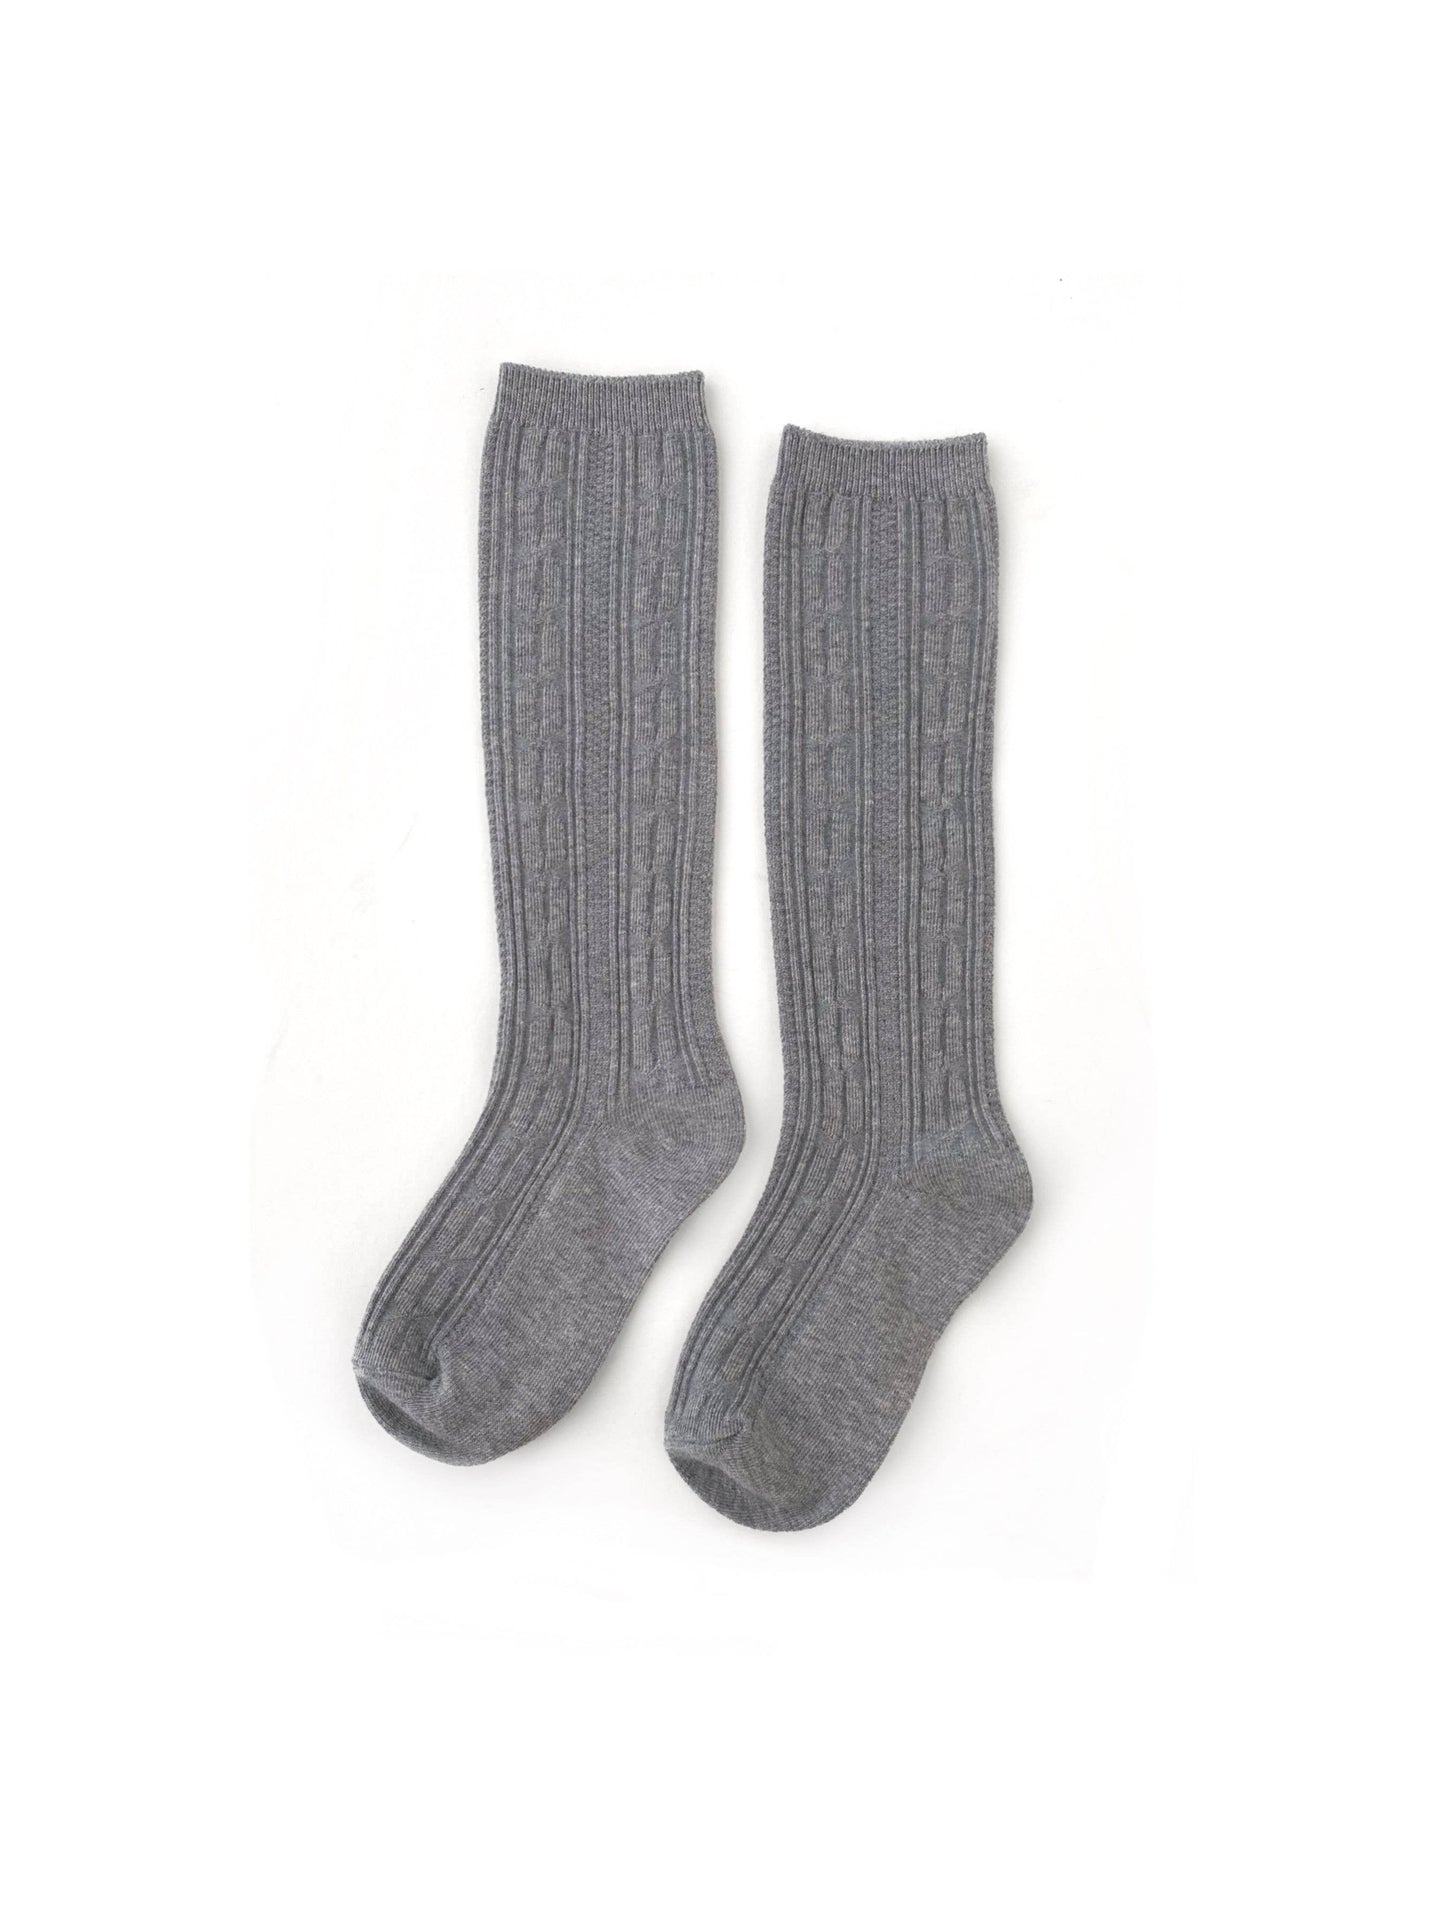 Gray Knit Knee High Socks {RTS}